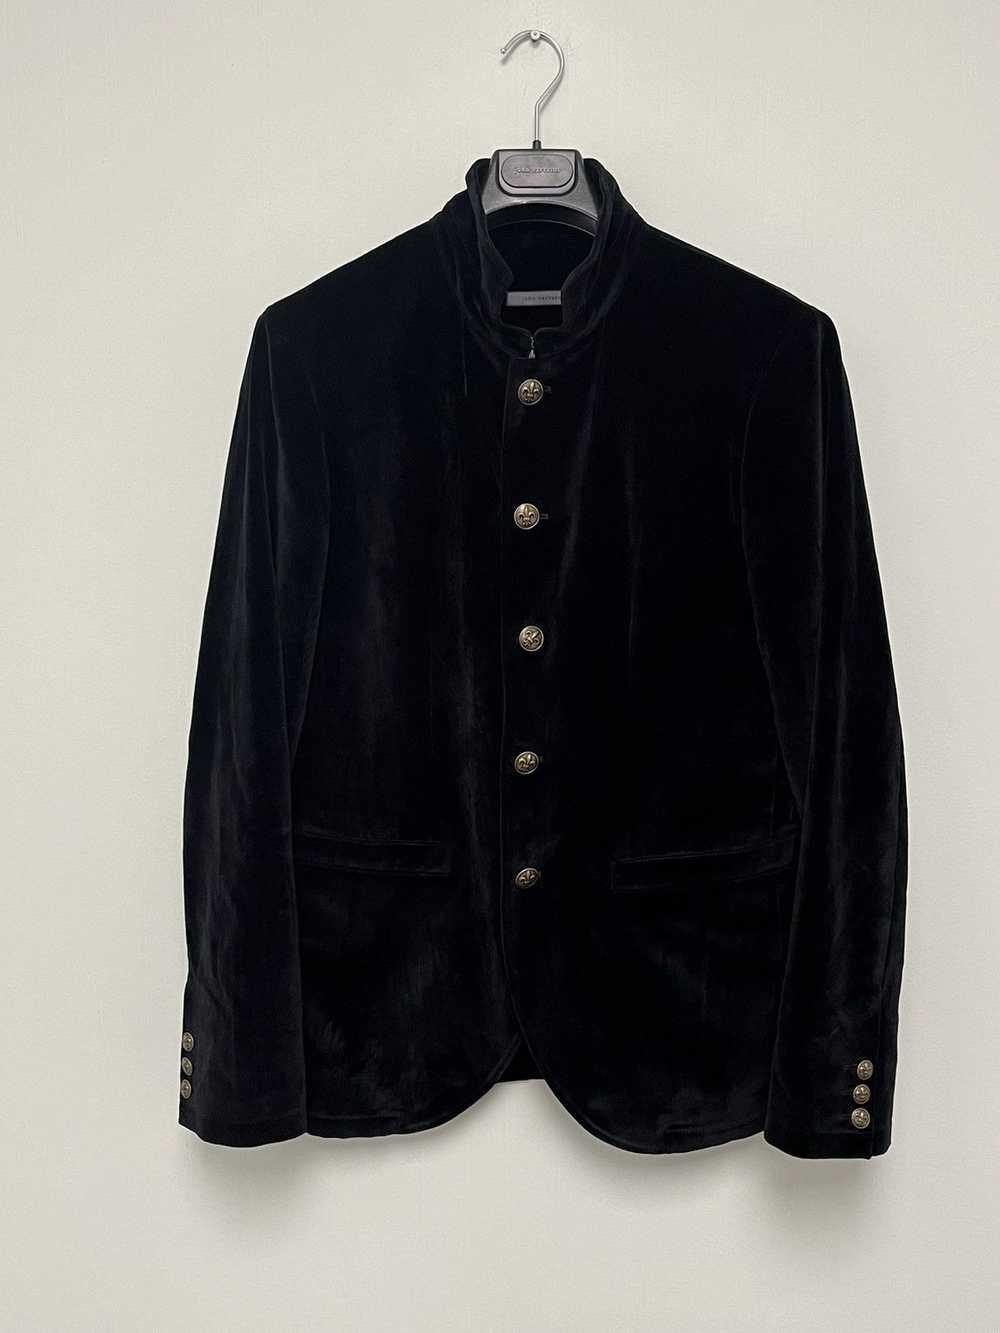 John Varvatos Crushed velvet jacket. Black. 50 - image 5